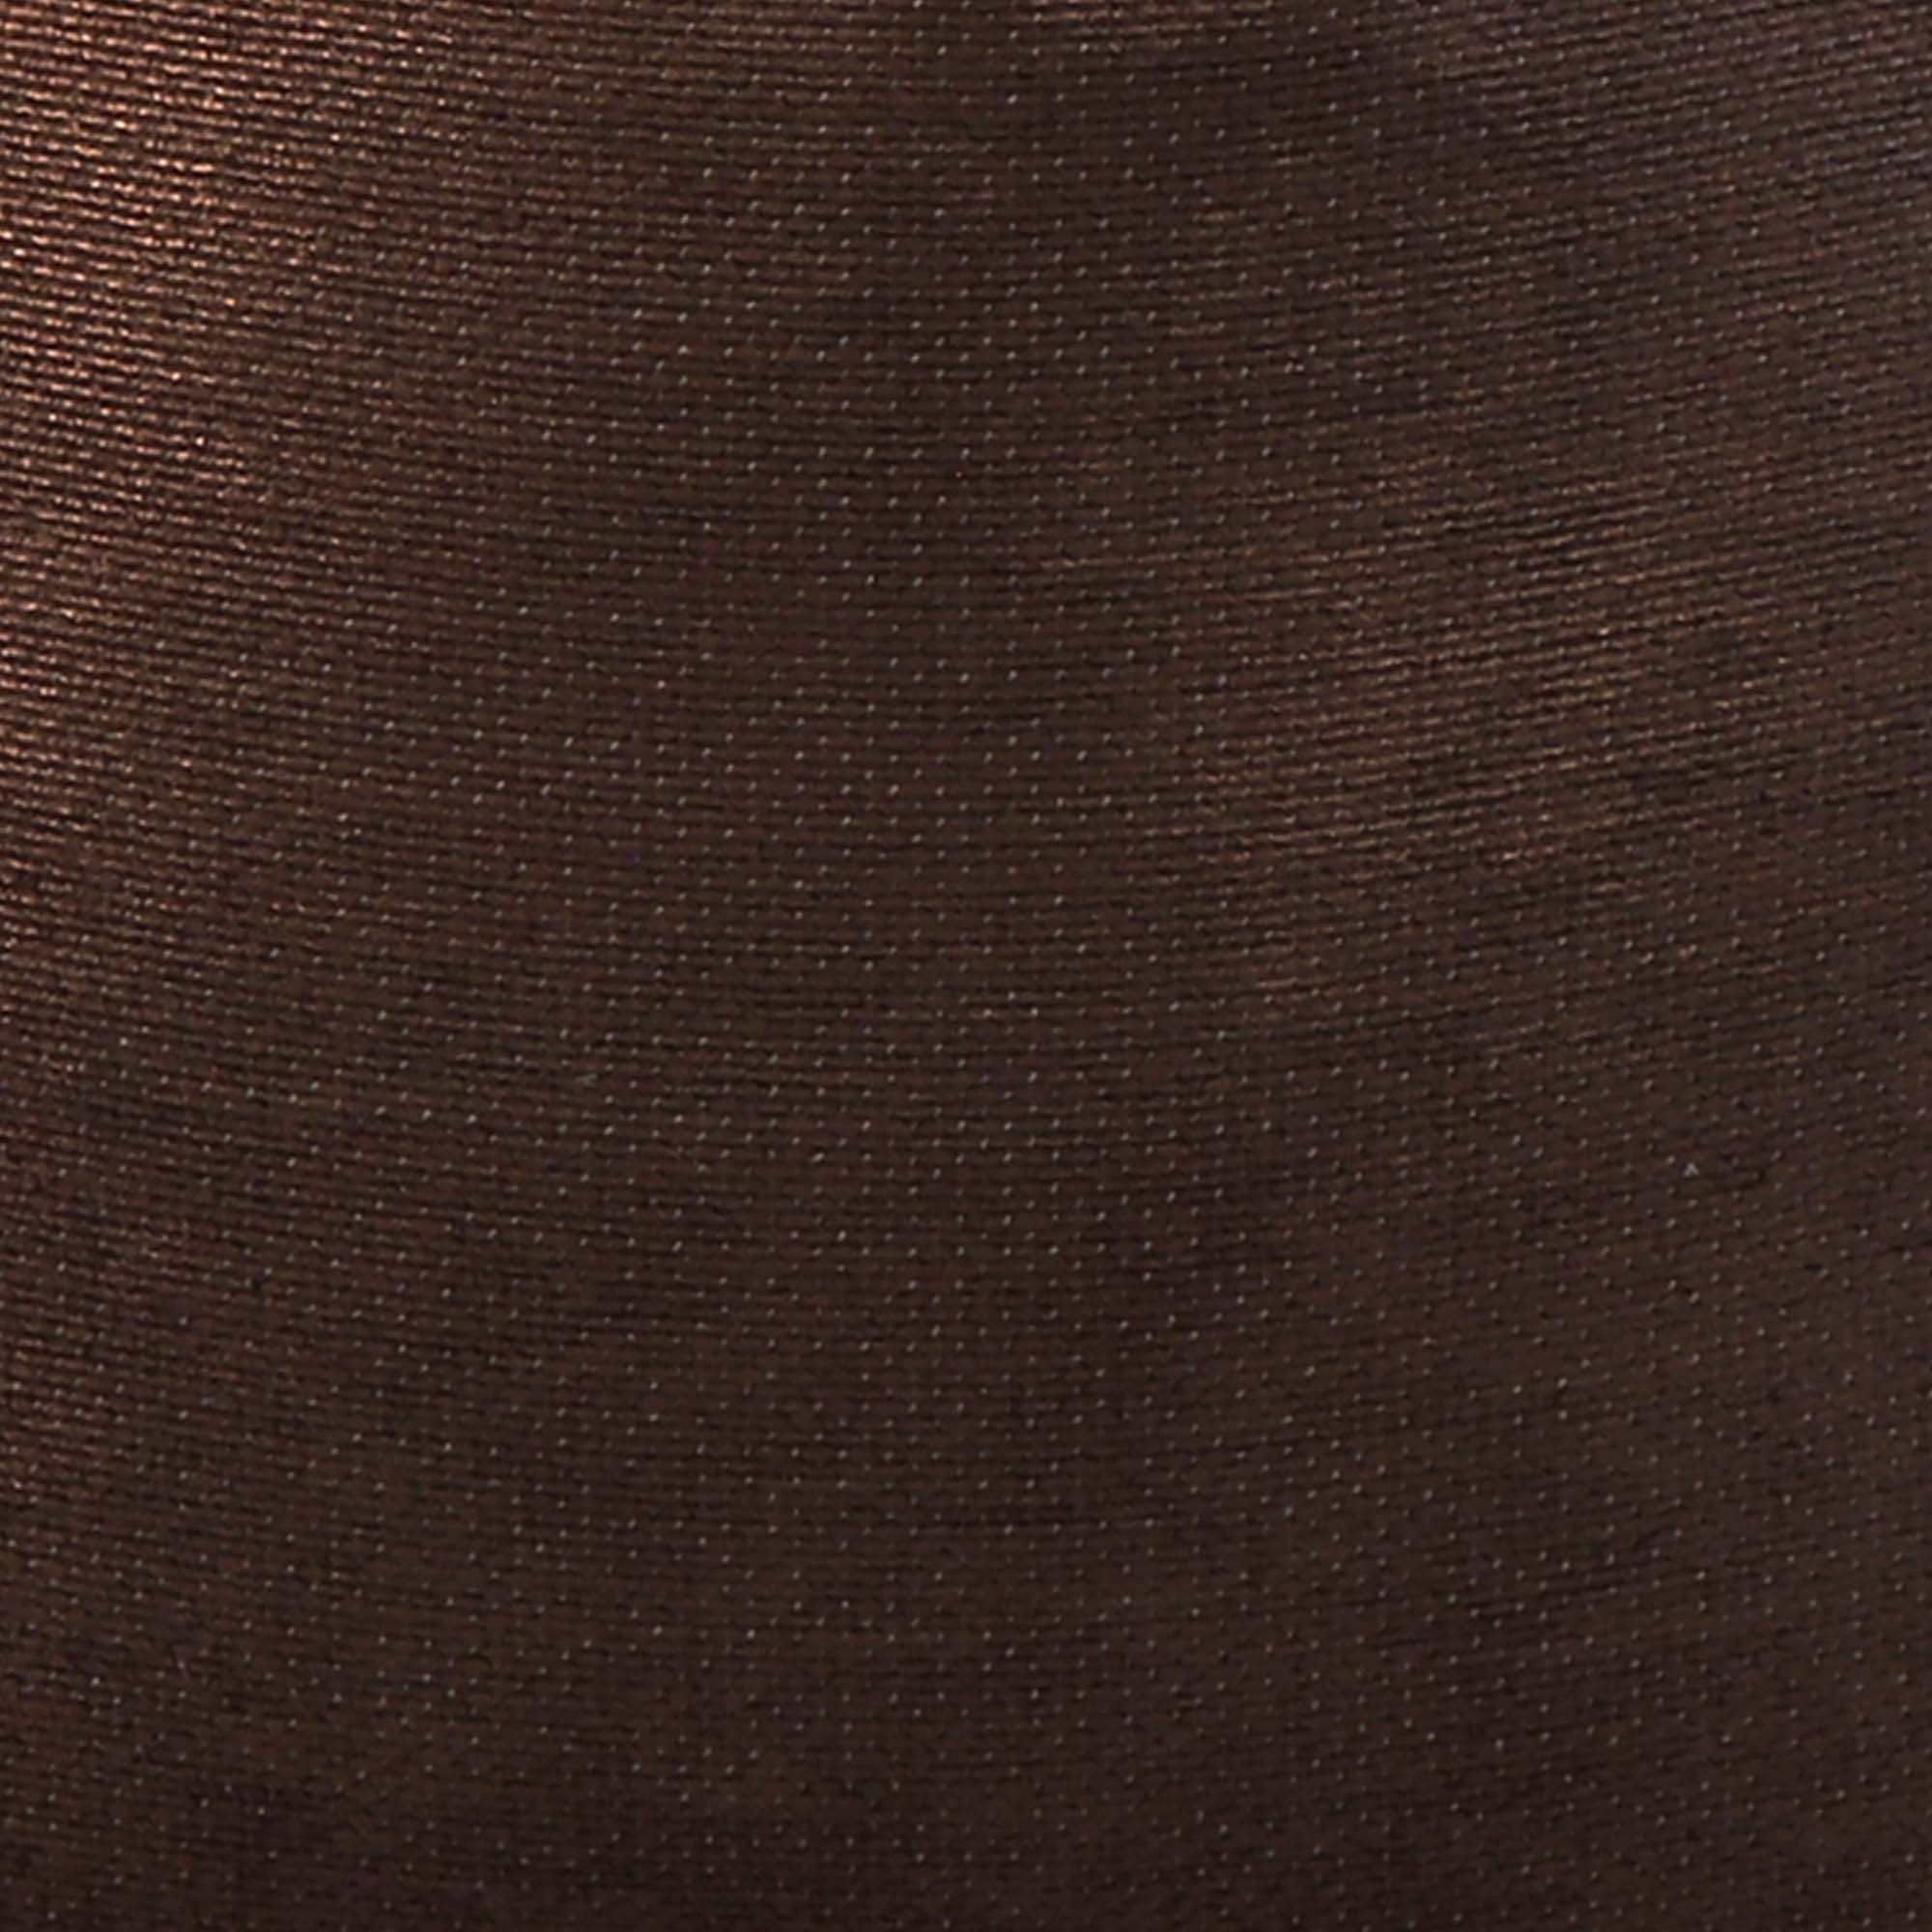 Glimmer Bronze / 4x4 inch Fabric Swatch